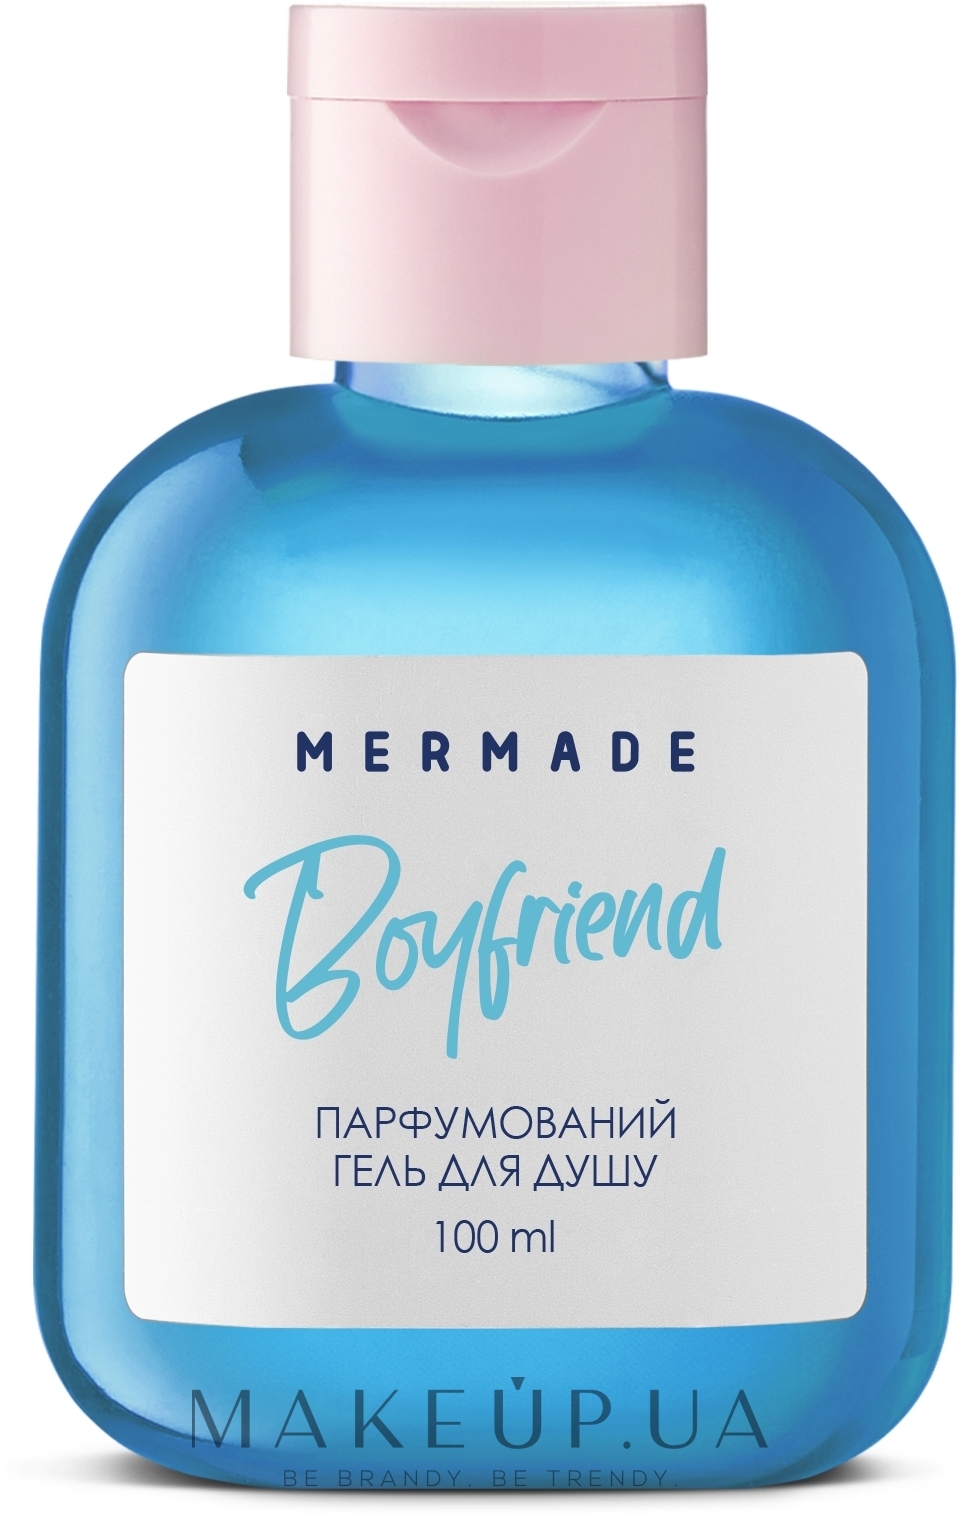 Mermade Boyfriend - Парфюмированный гель для душа — фото 100ml